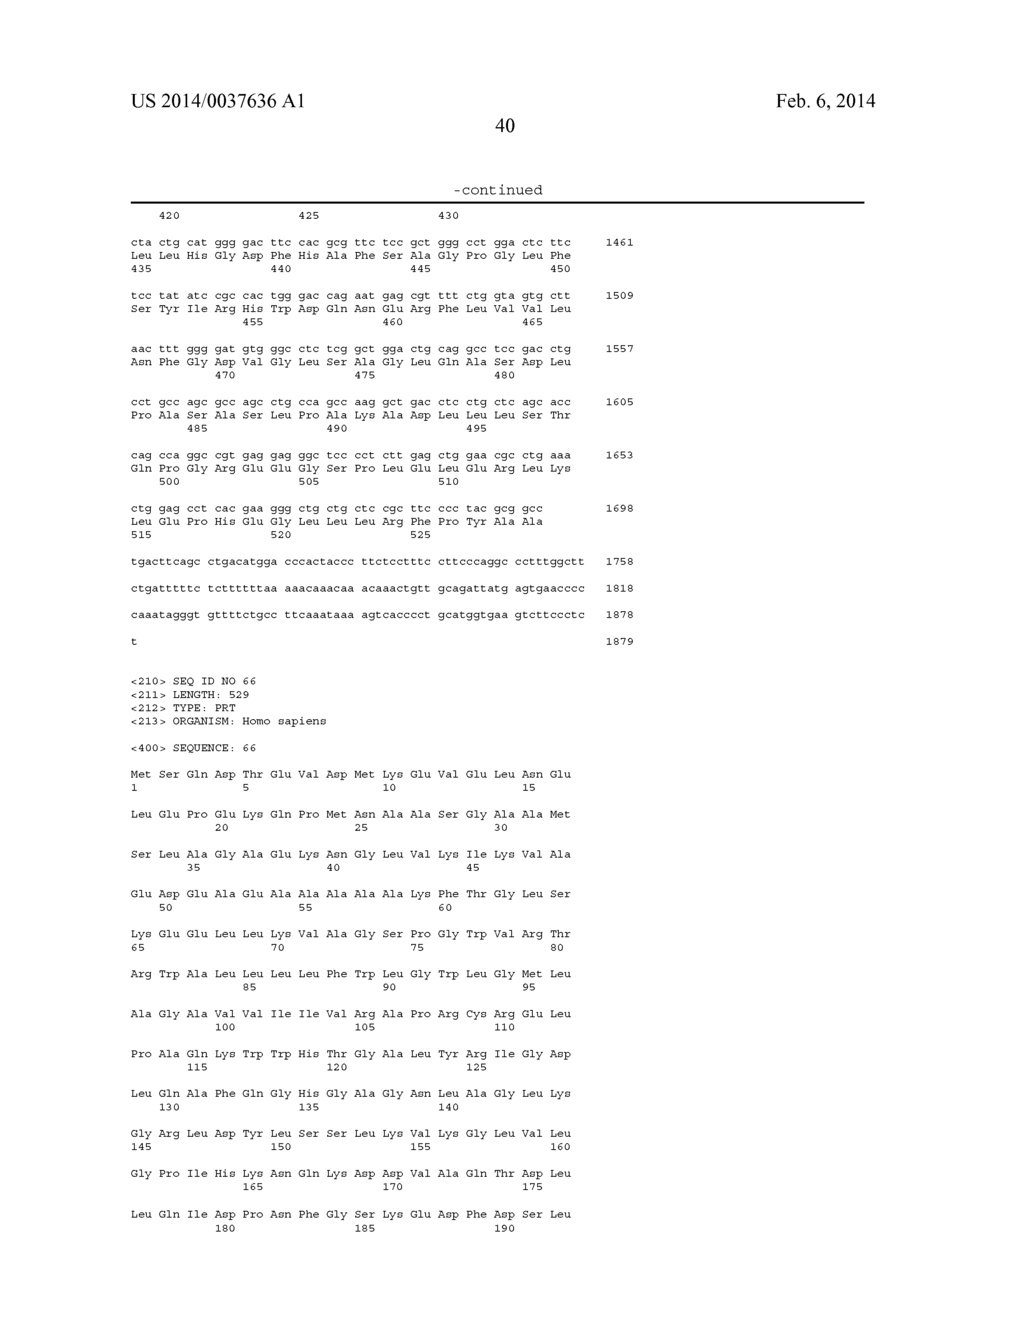 ANTI-CD98 ANTIBODY PROCESSES - diagram, schematic, and image 64